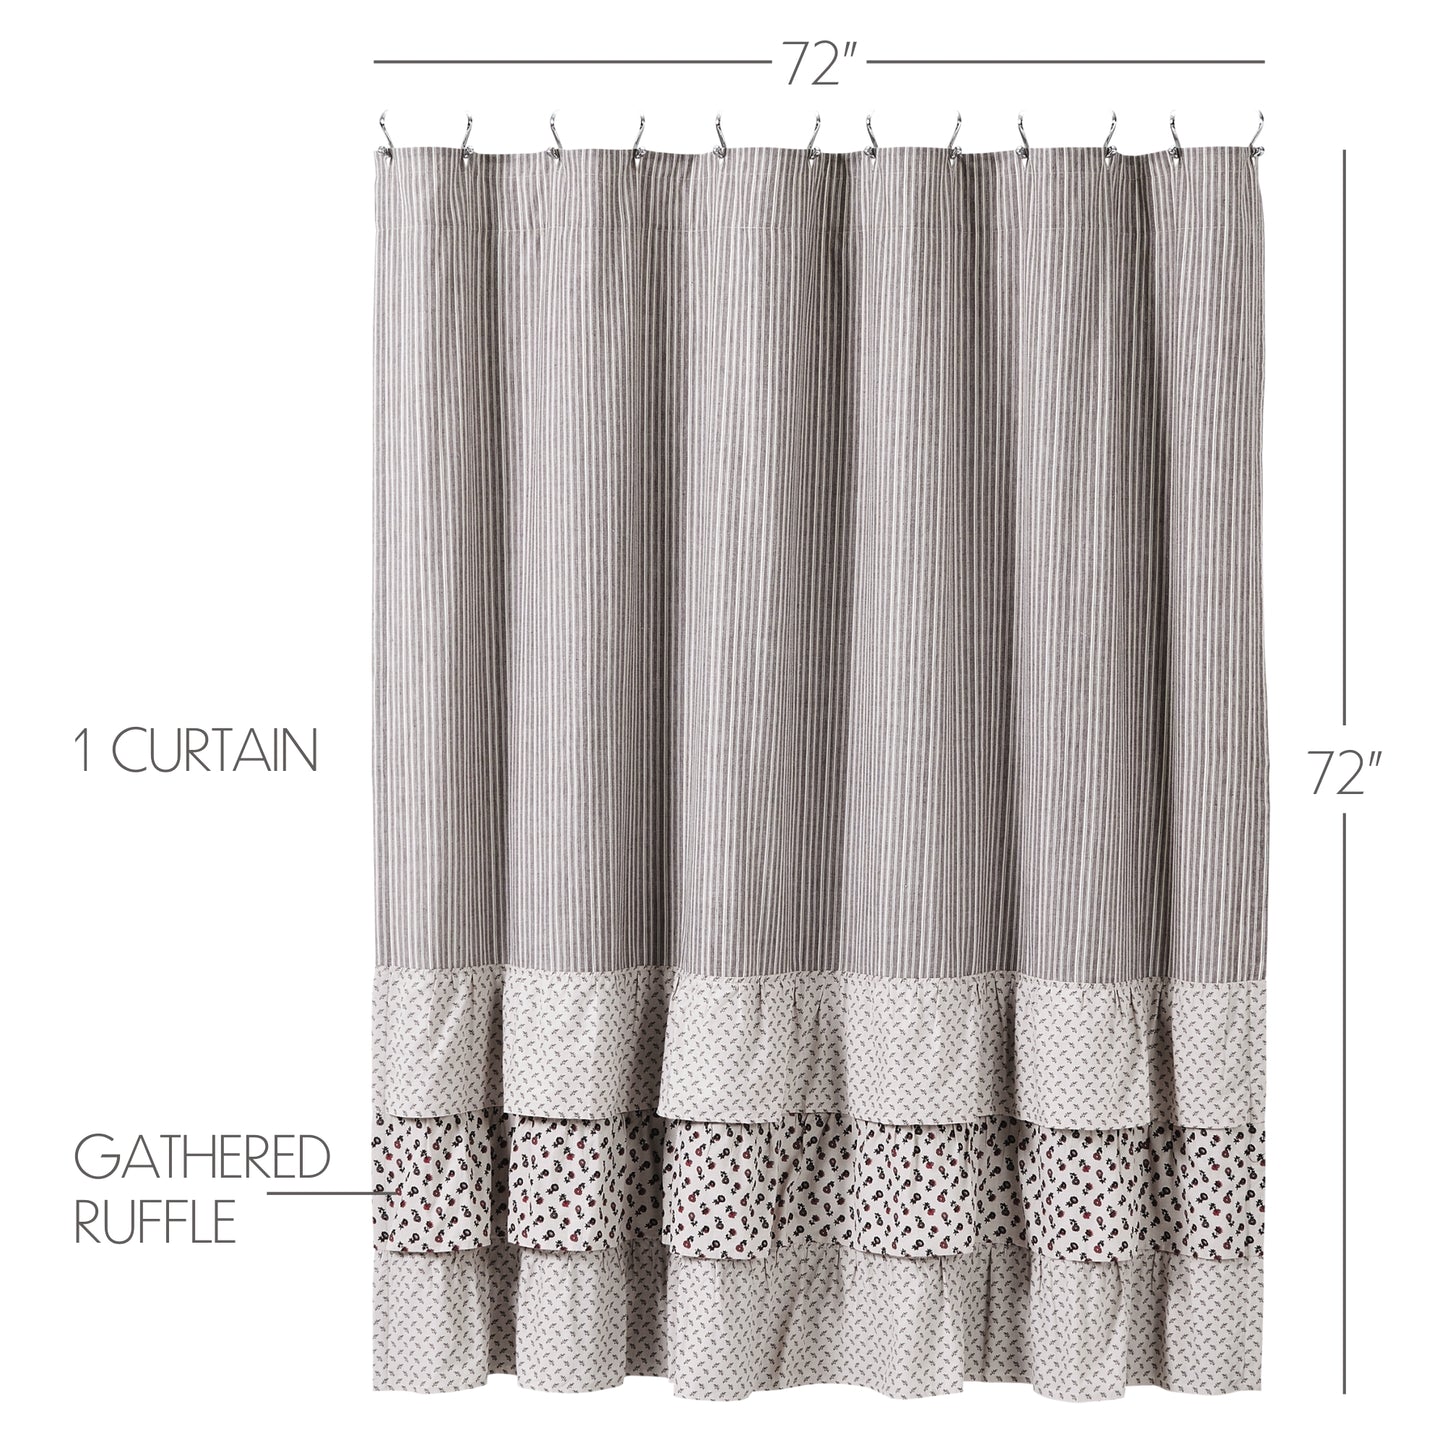 80367-Florette-Ruffled-Shower-Curtain-72x72-image-1